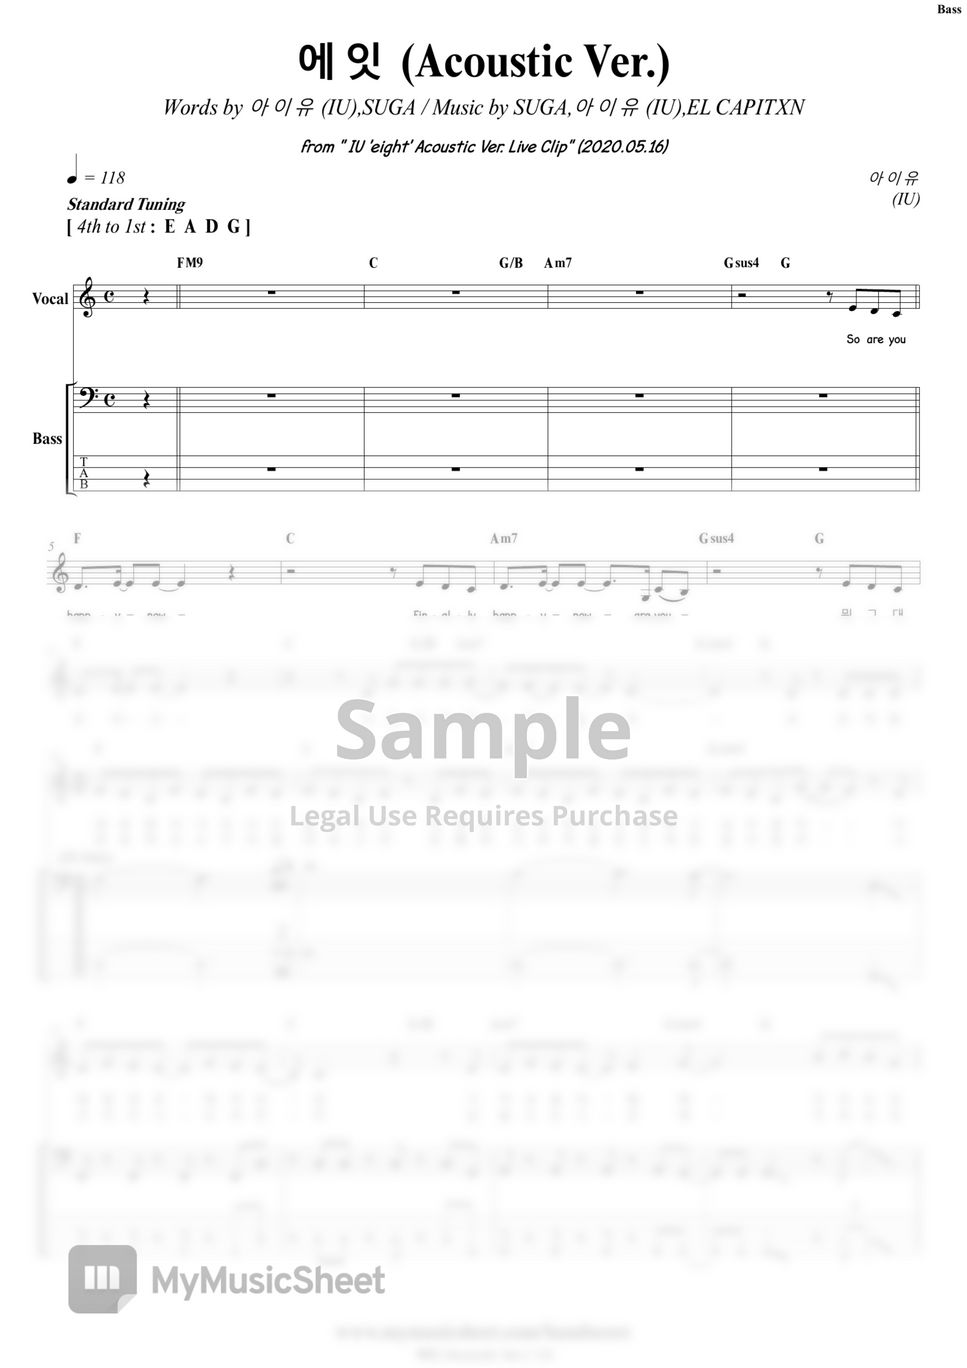 IU - Eight (Acoustic Ver.) |Bass